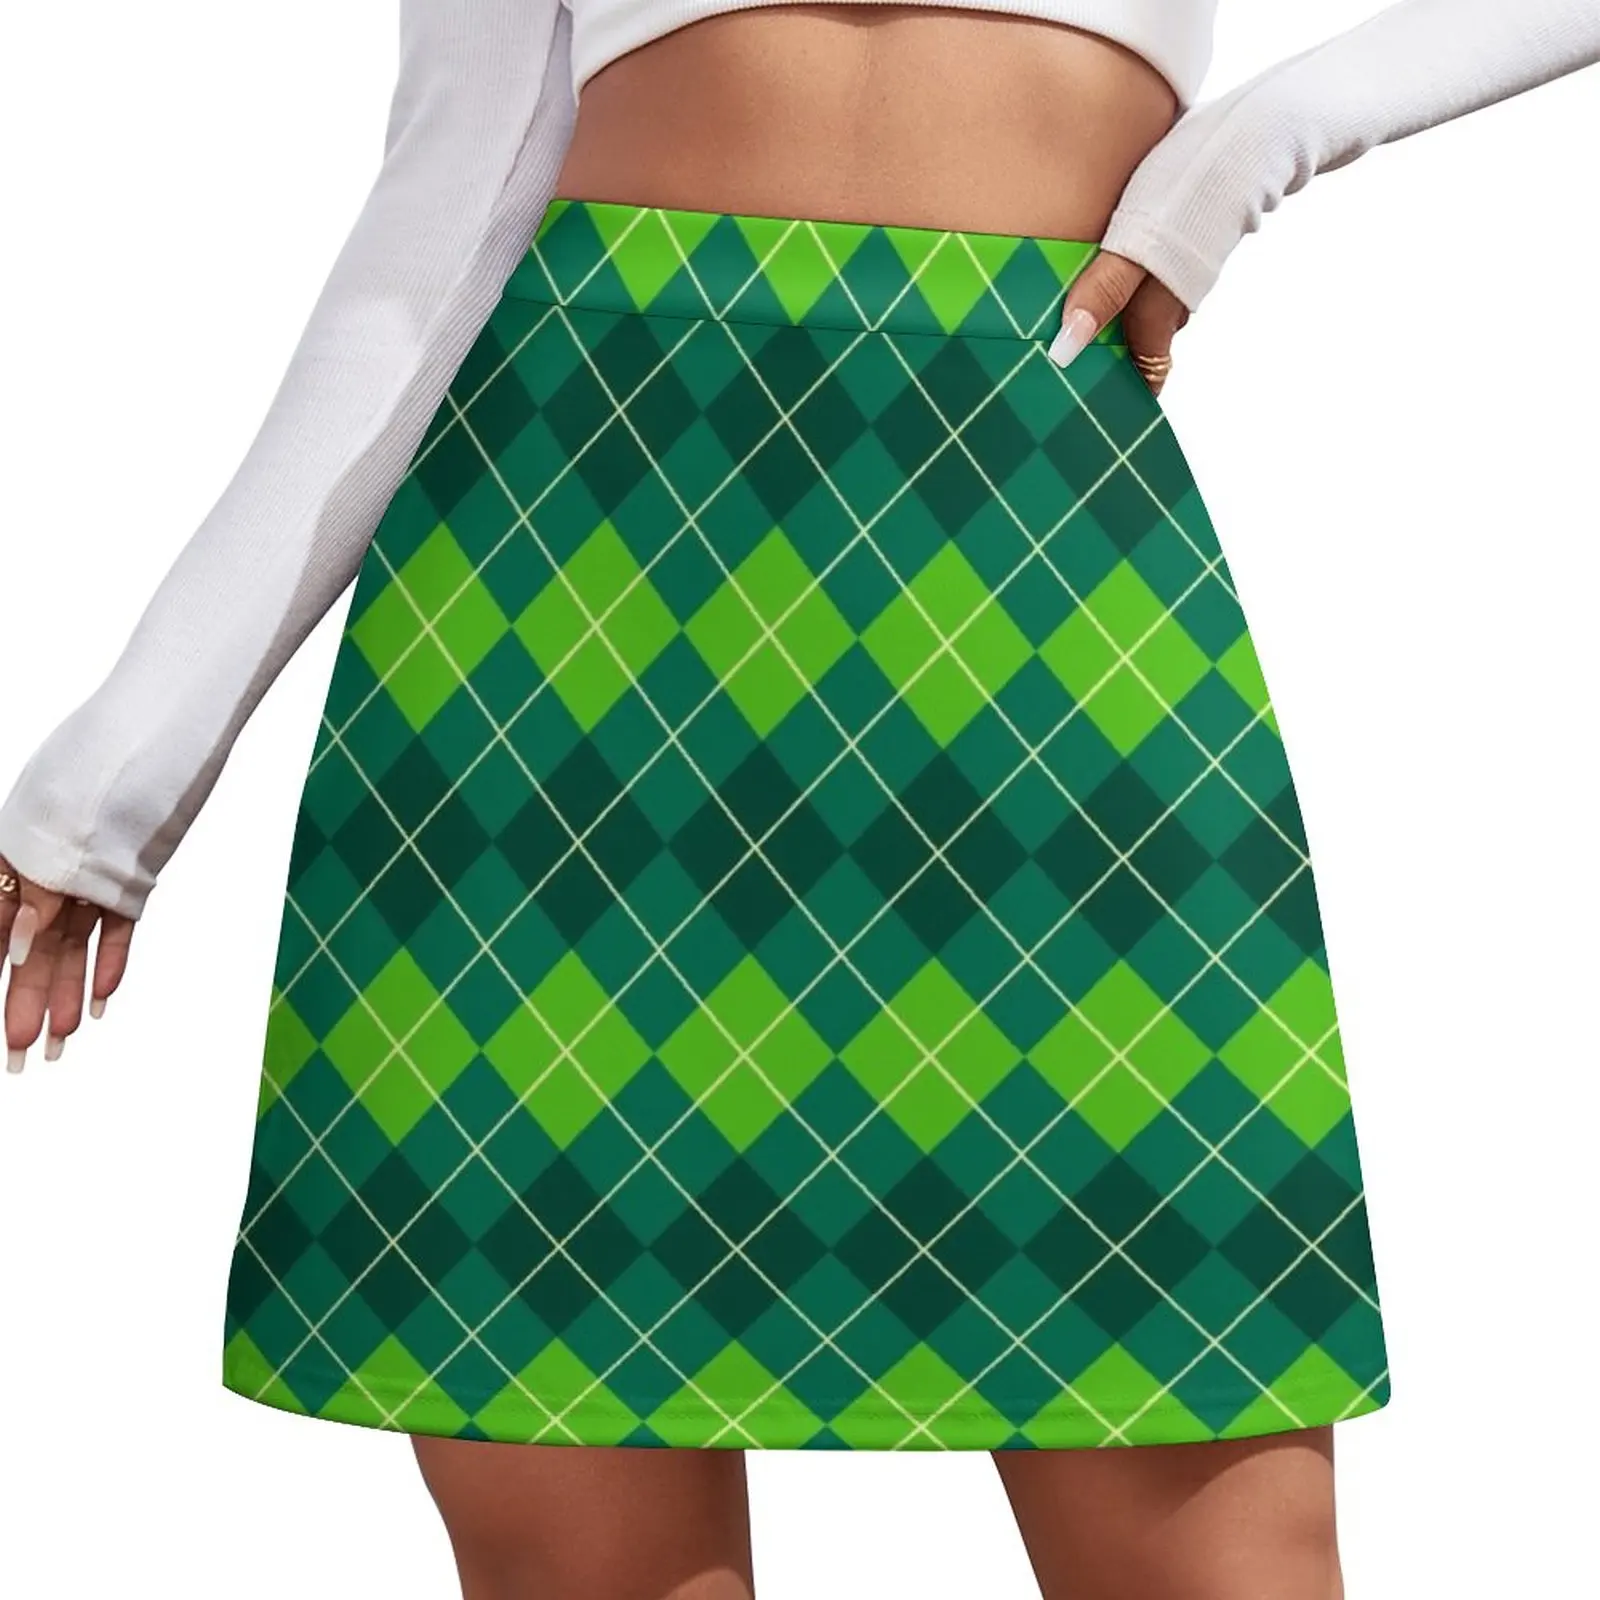 Green Argyle Pattern Mini Skirt clothes for women Korean skirts skirts for woman korean style [fila]argyle pattern men s drawers